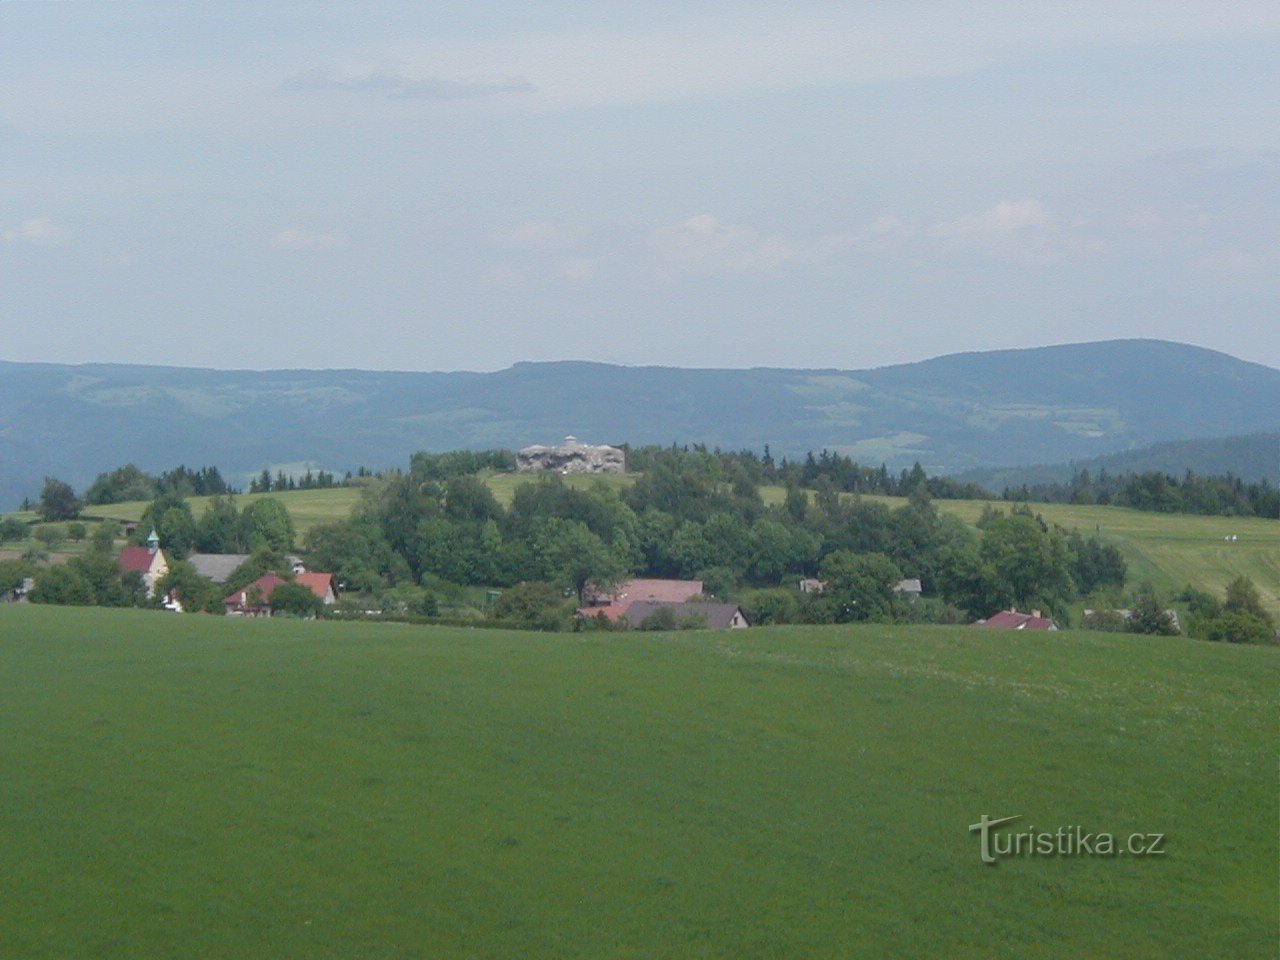 Torre di avvistamento su Dobrošov - vista verso la fortezza di Můstek